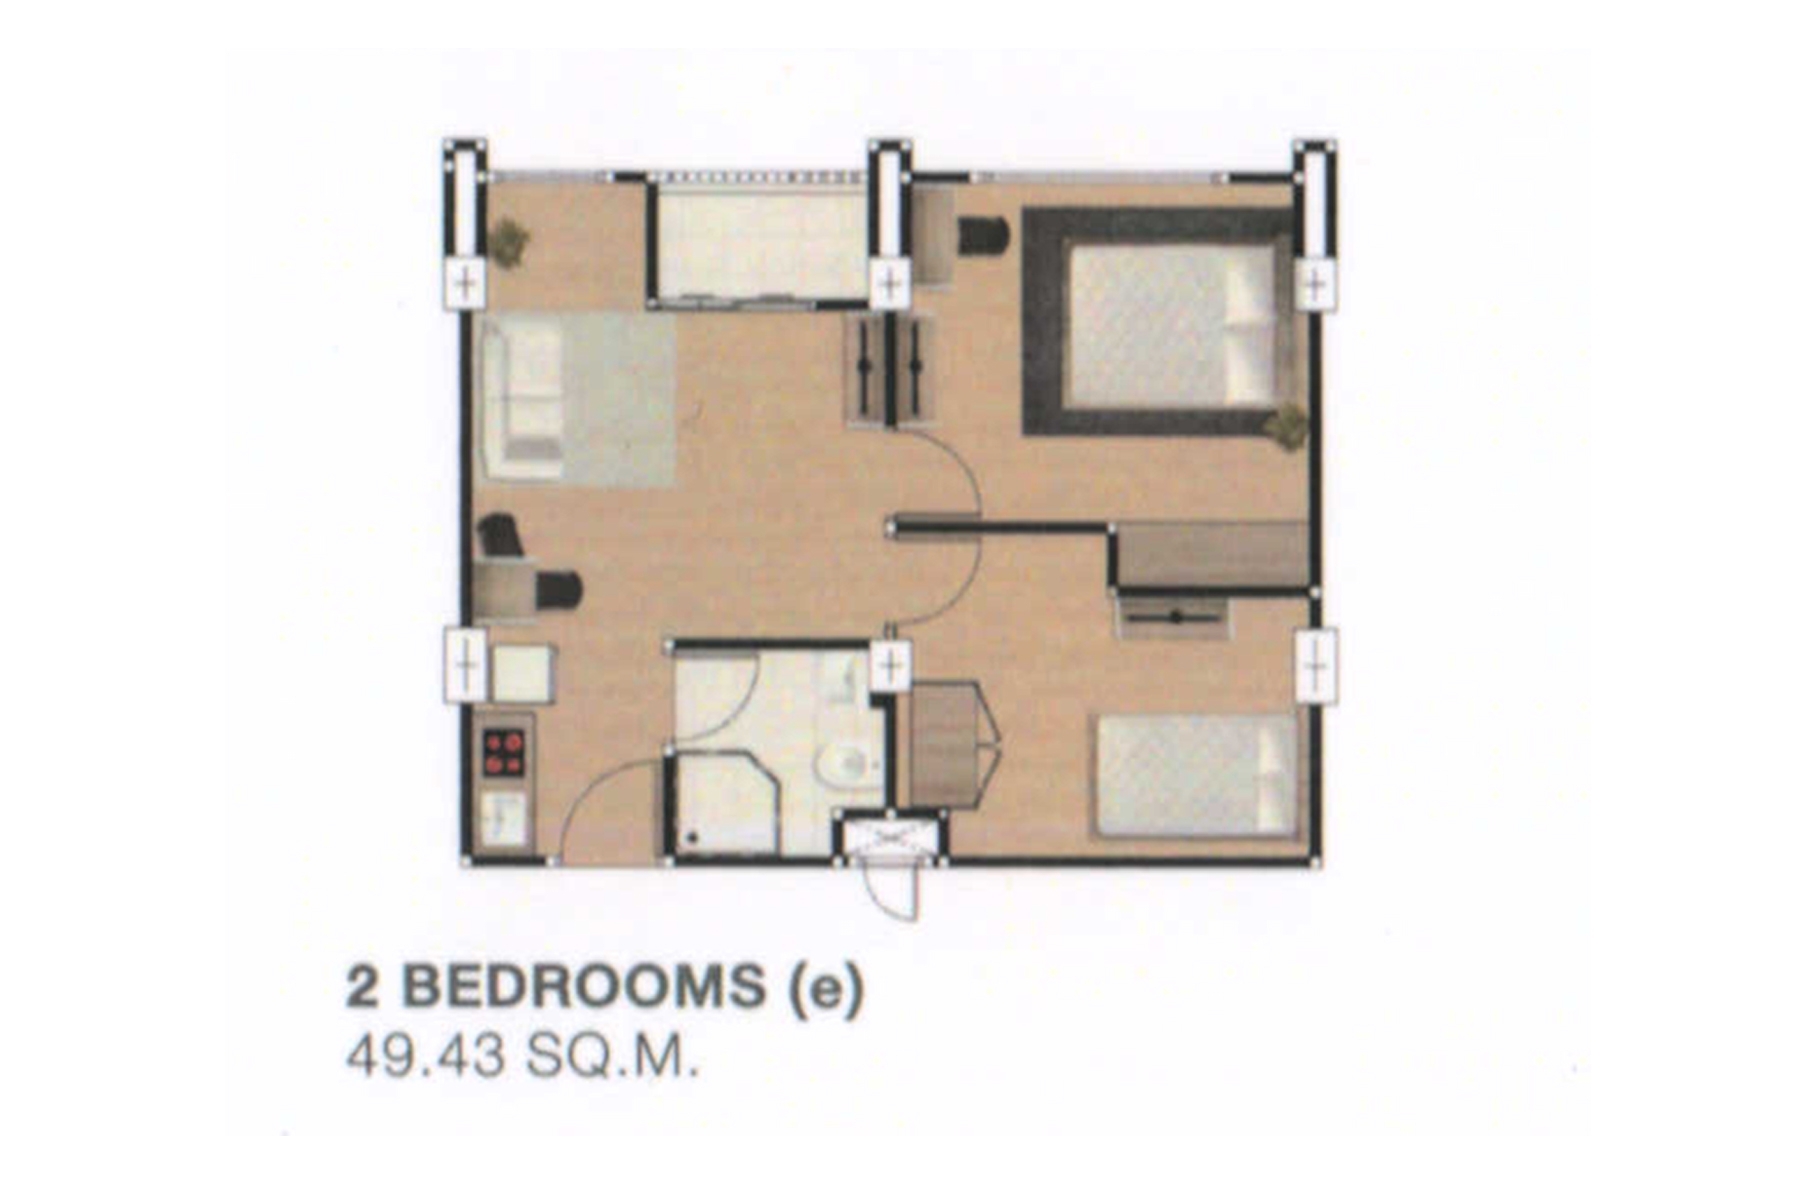 2 Bedroom ในโครงการ ซิตี้ลิ้งค์ คอนโด, ภาพที่ 4